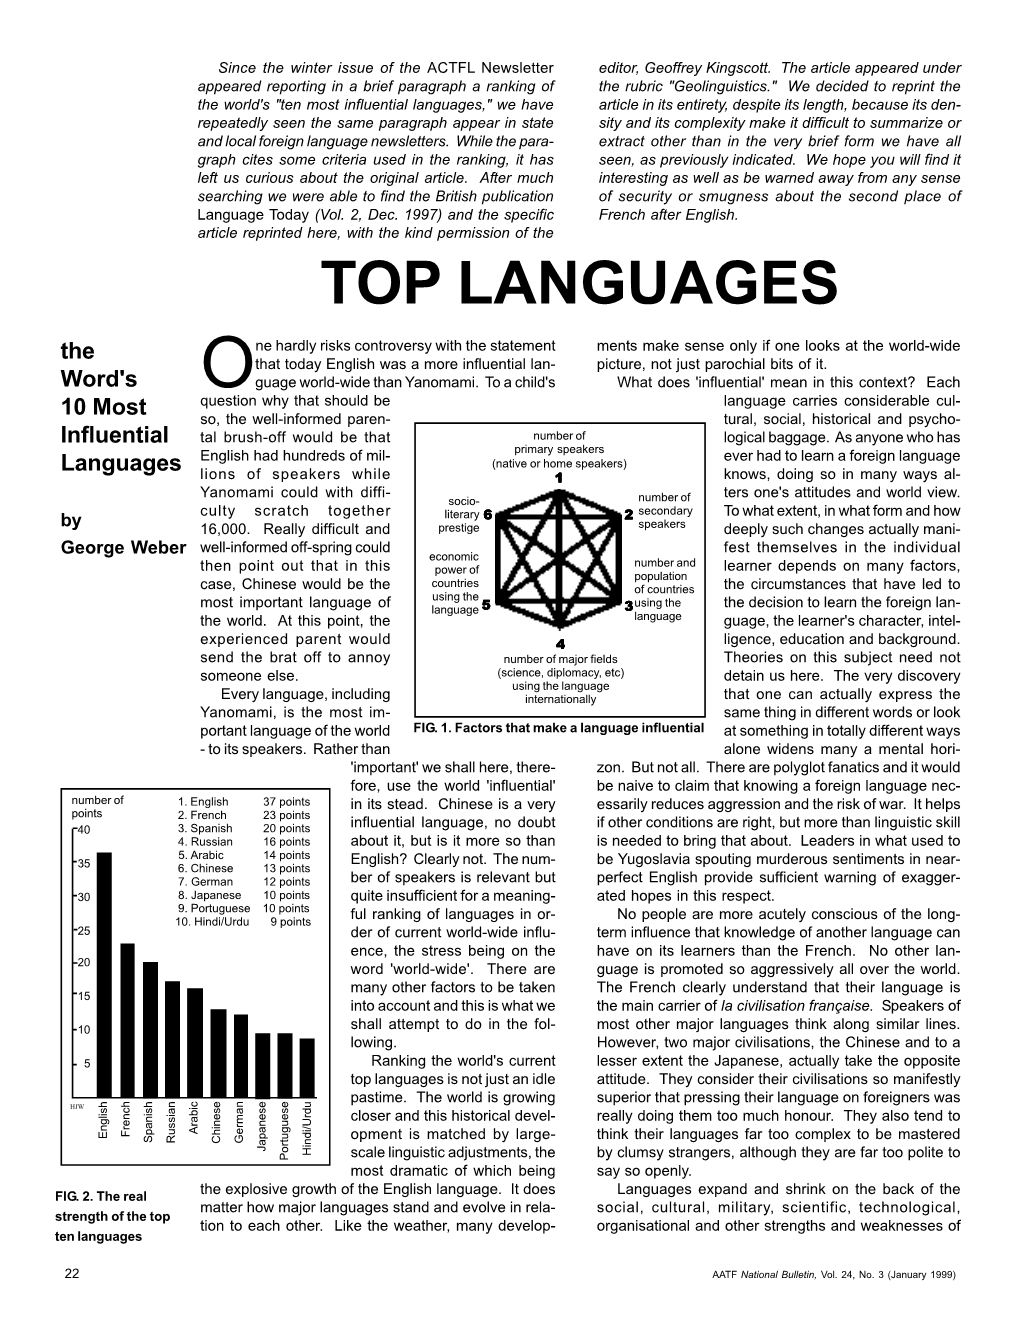 Top Languages